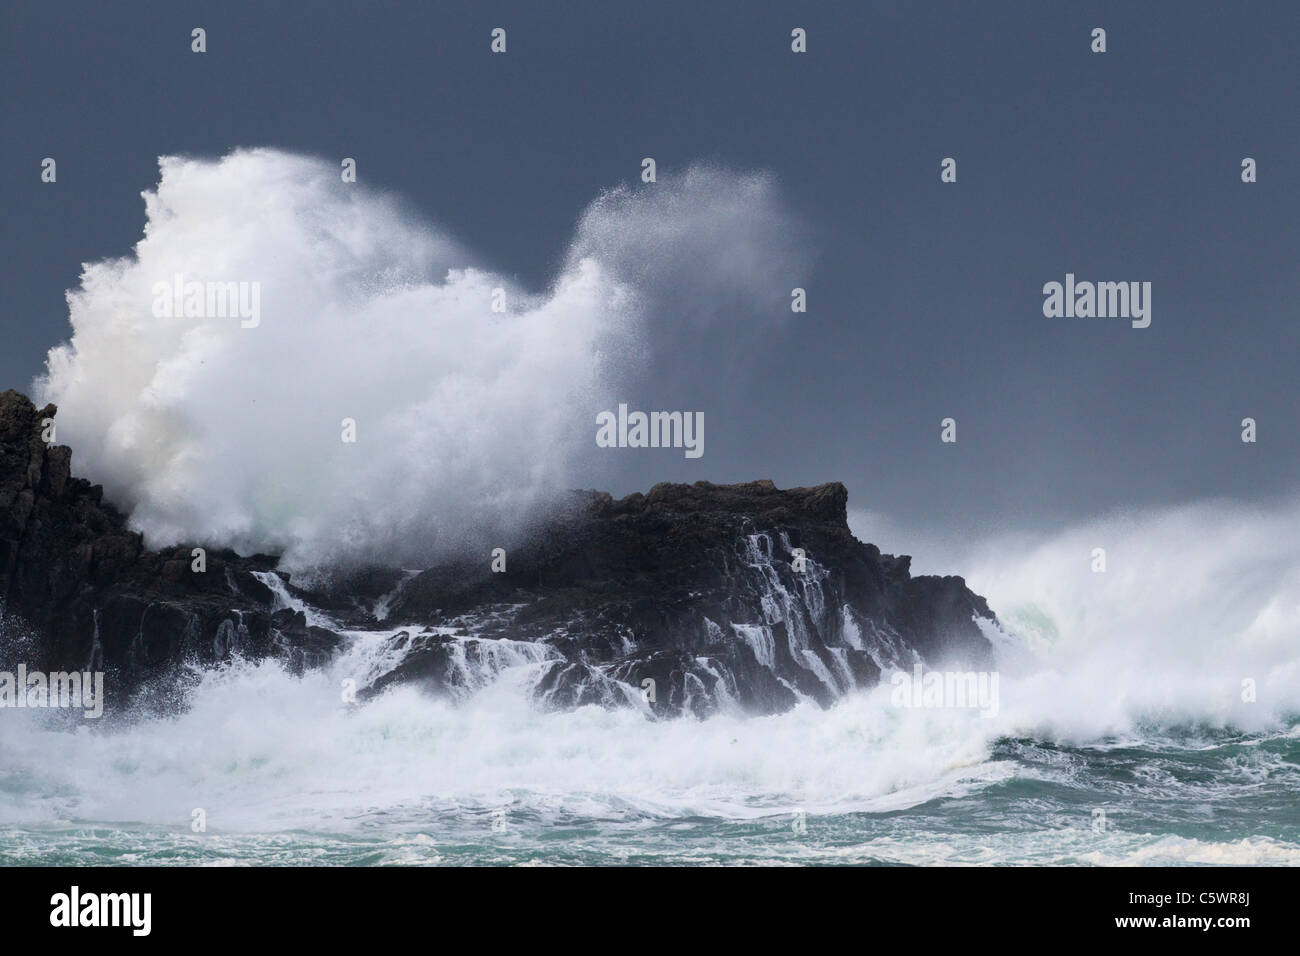 Atlantic Storm Waves breaking on rocky shore Porthnahaven, Islay Scotland, UK LA005421 Stock Photo